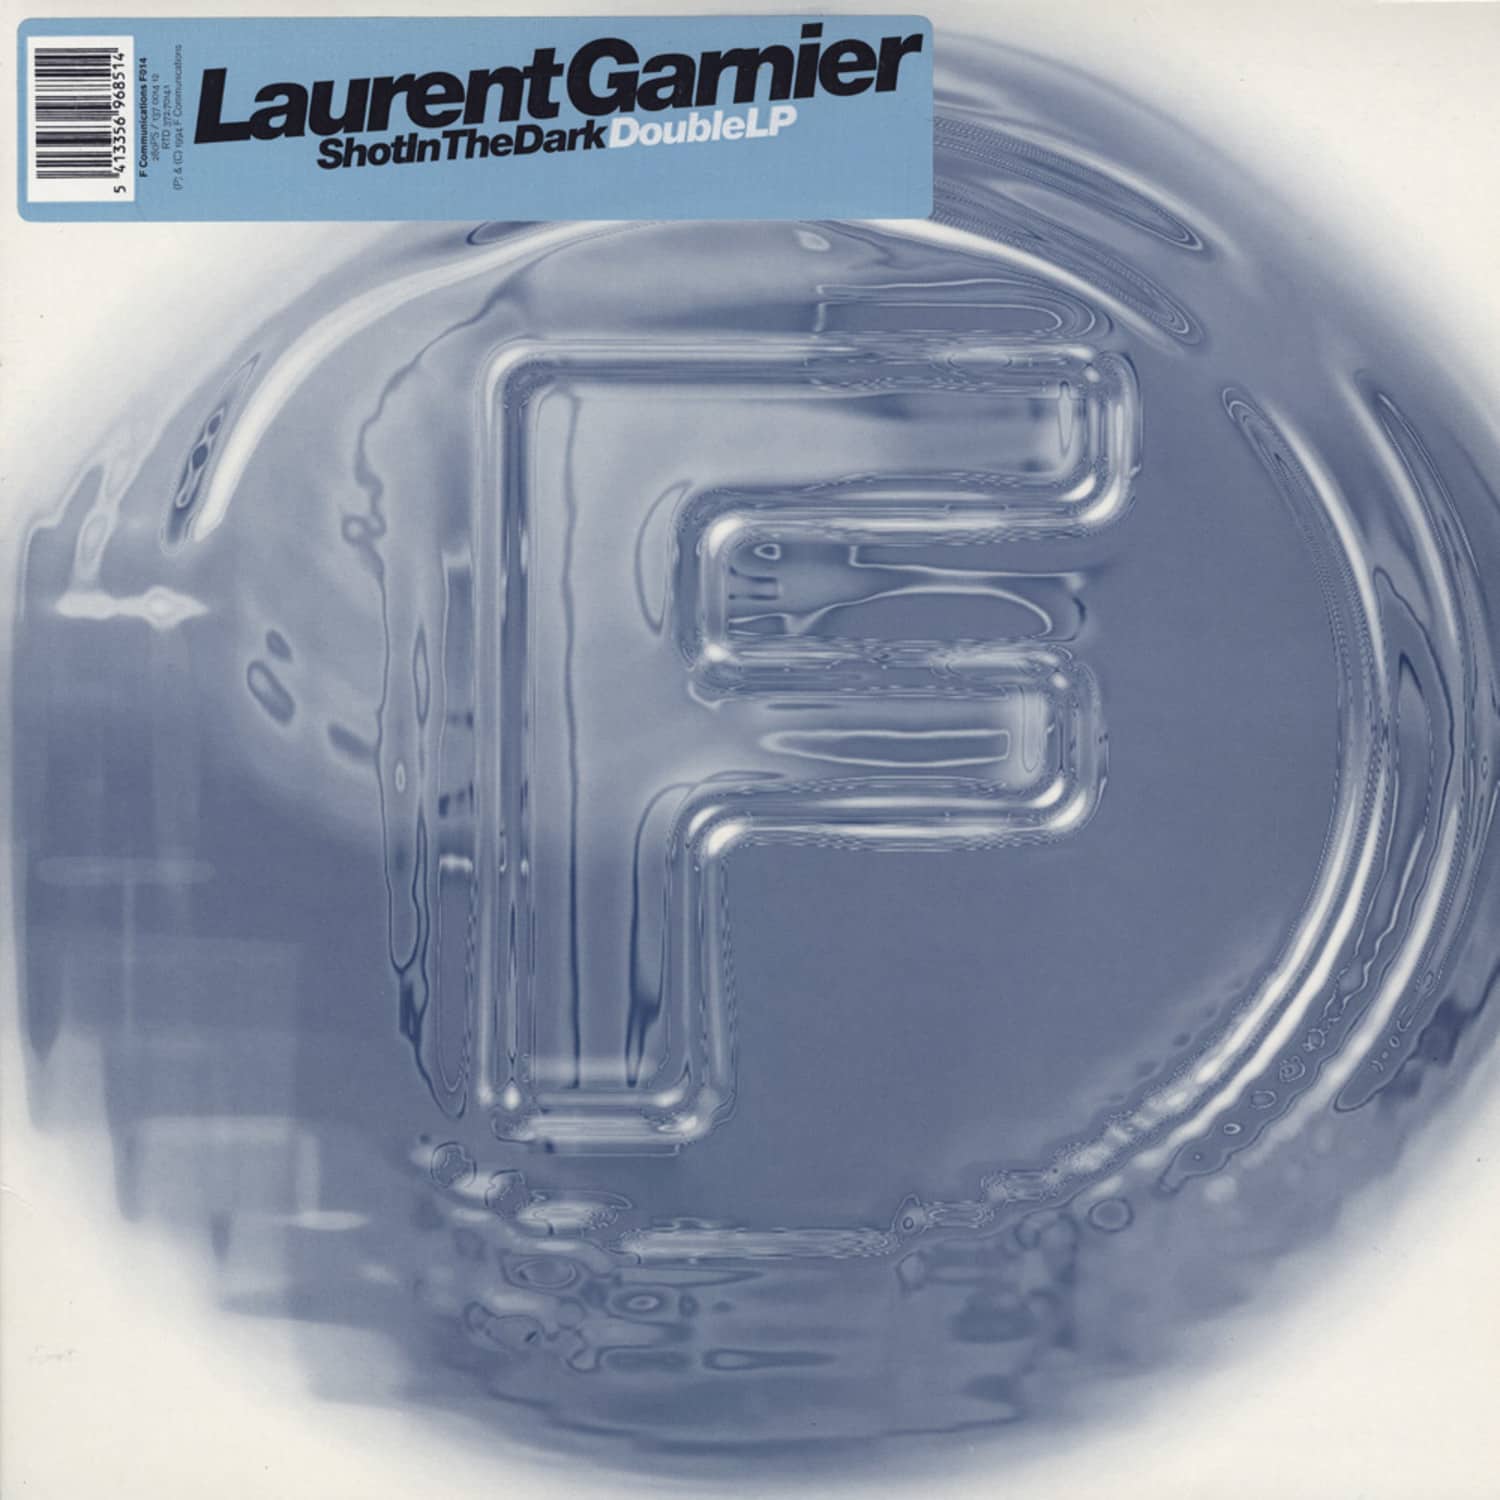 Laurent Garnier - SHOT IN THE DARK 